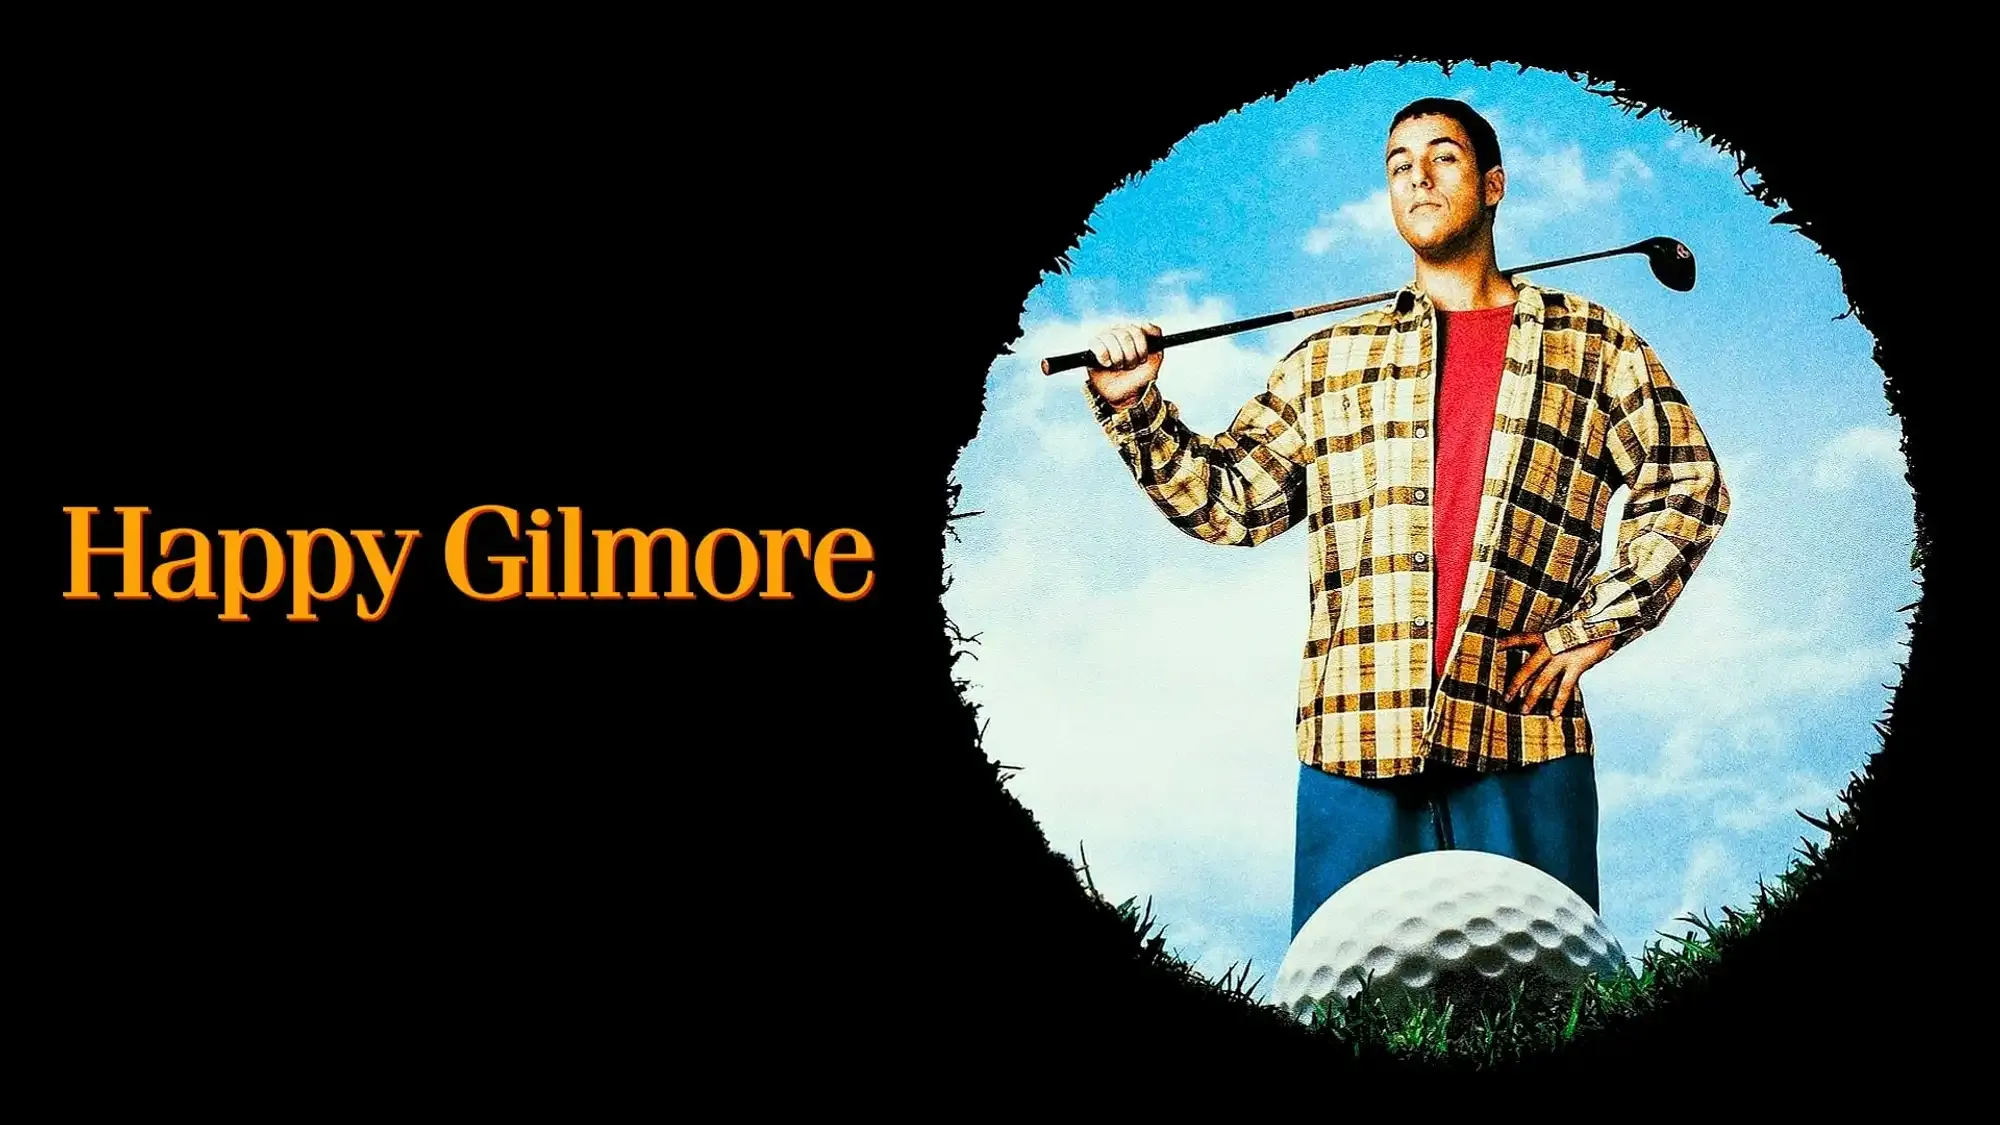 Happy Gilmore movie review